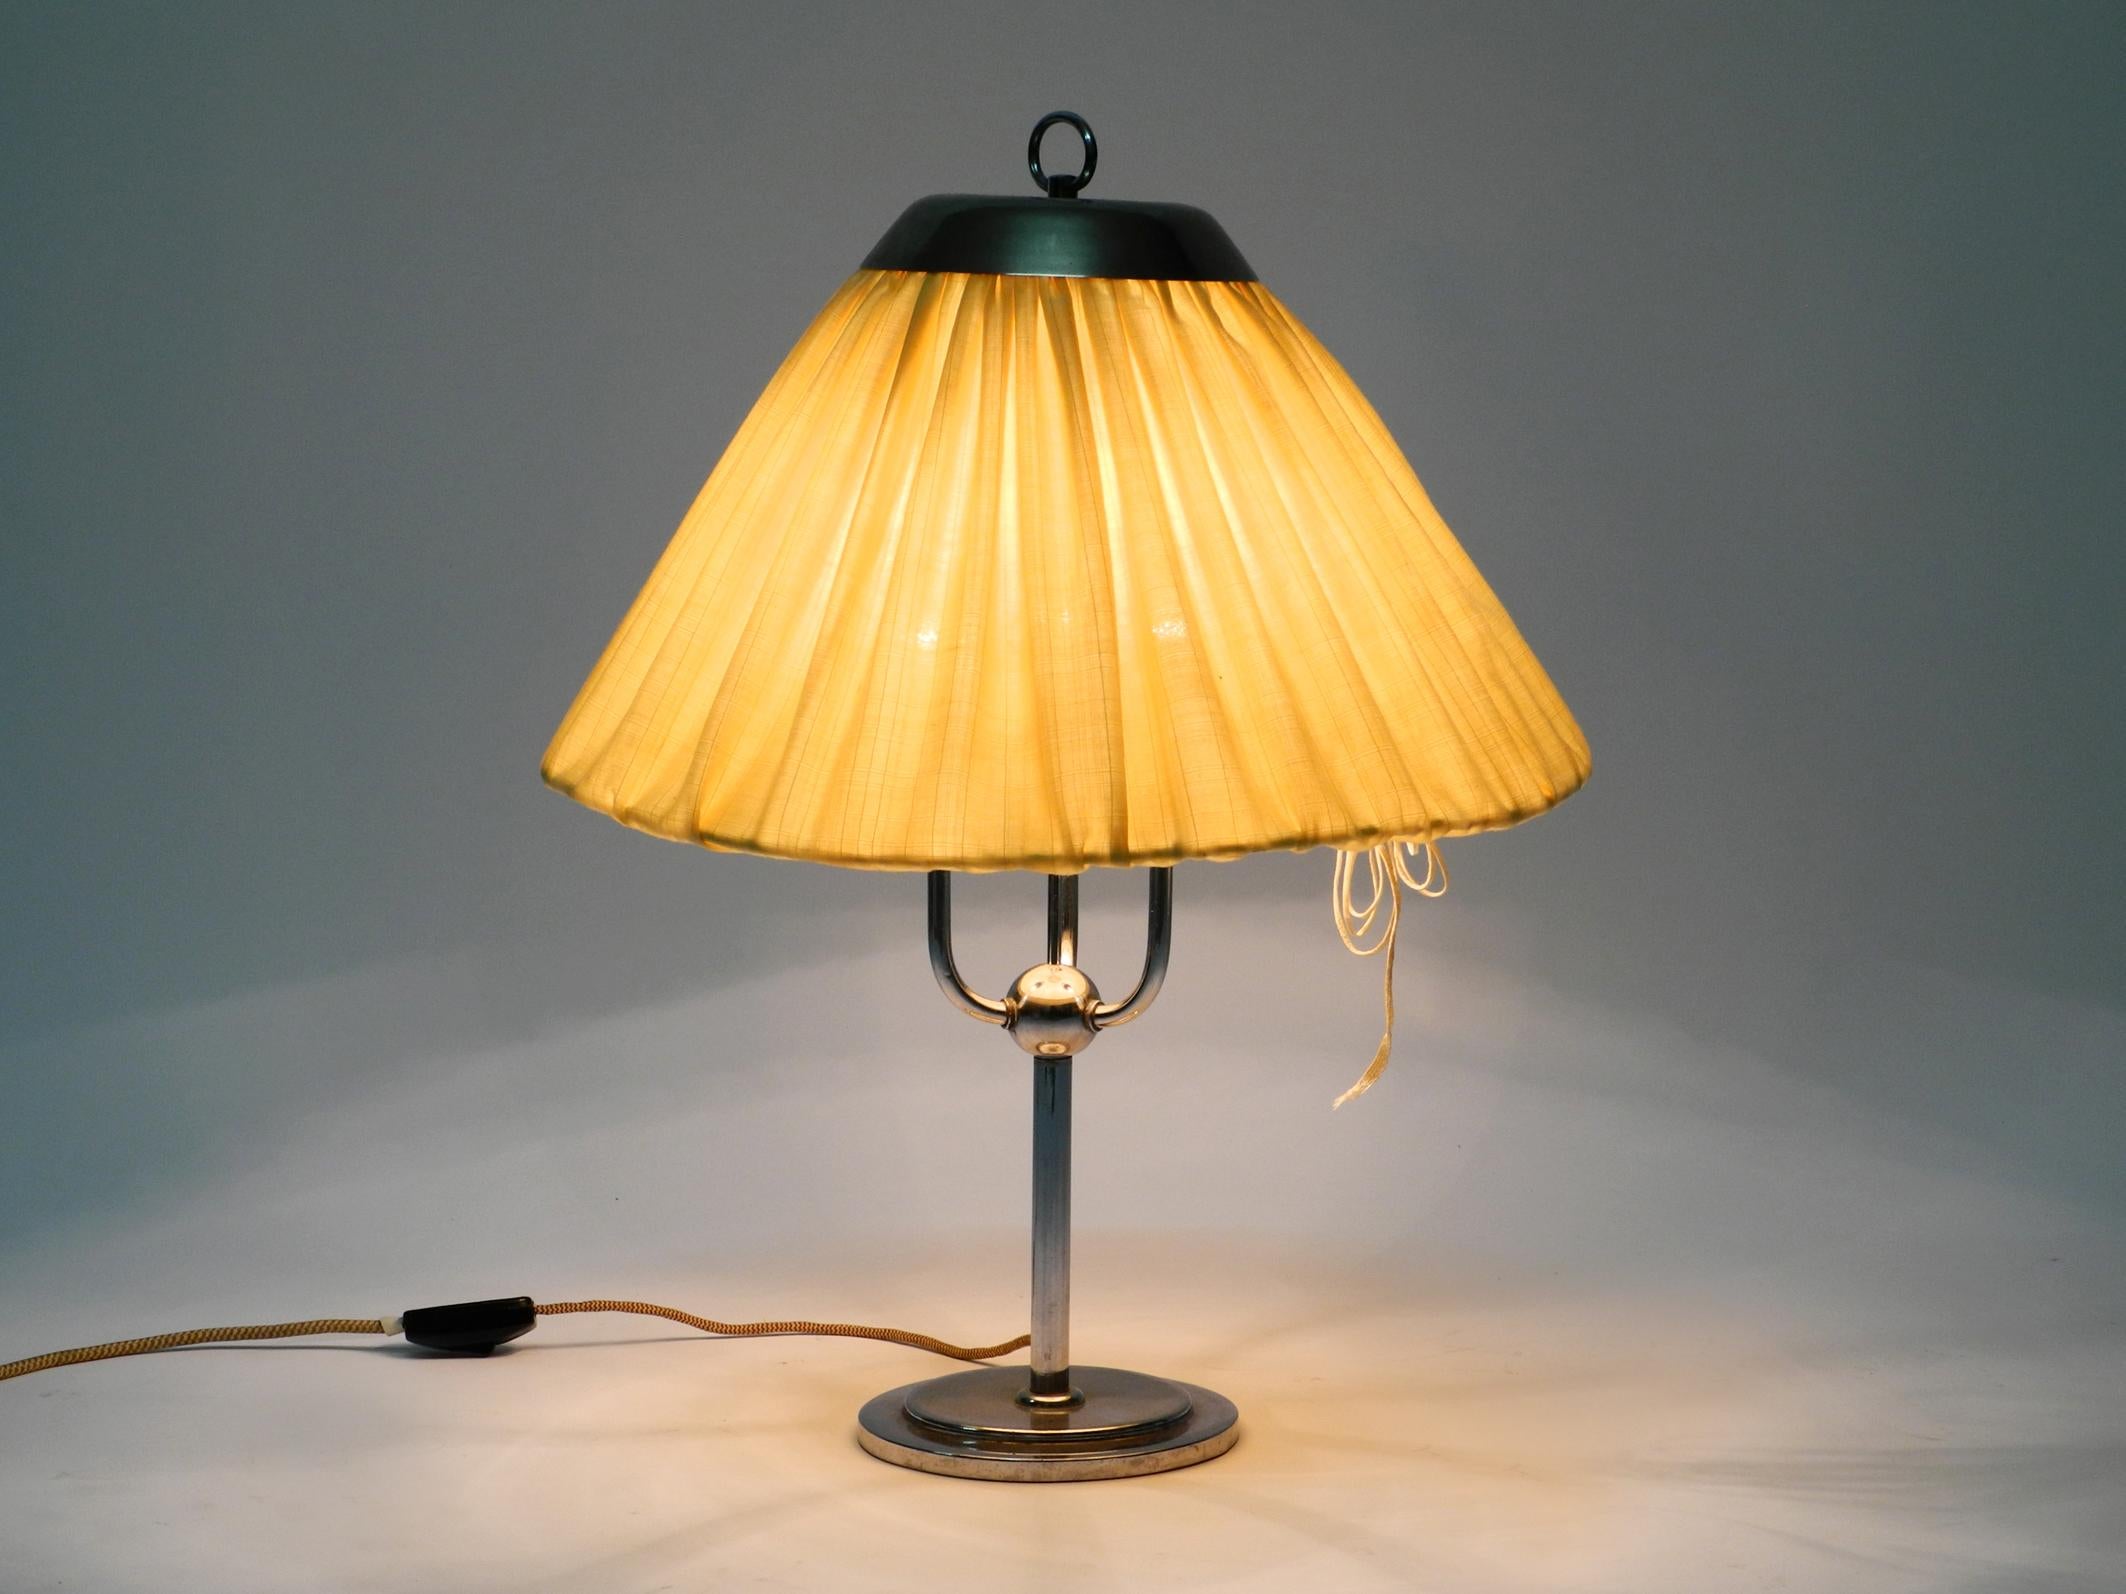 Austrian Beautiful Table Lamp from Around 1910 by Josef Hoffmann for Wiener Werkstätten